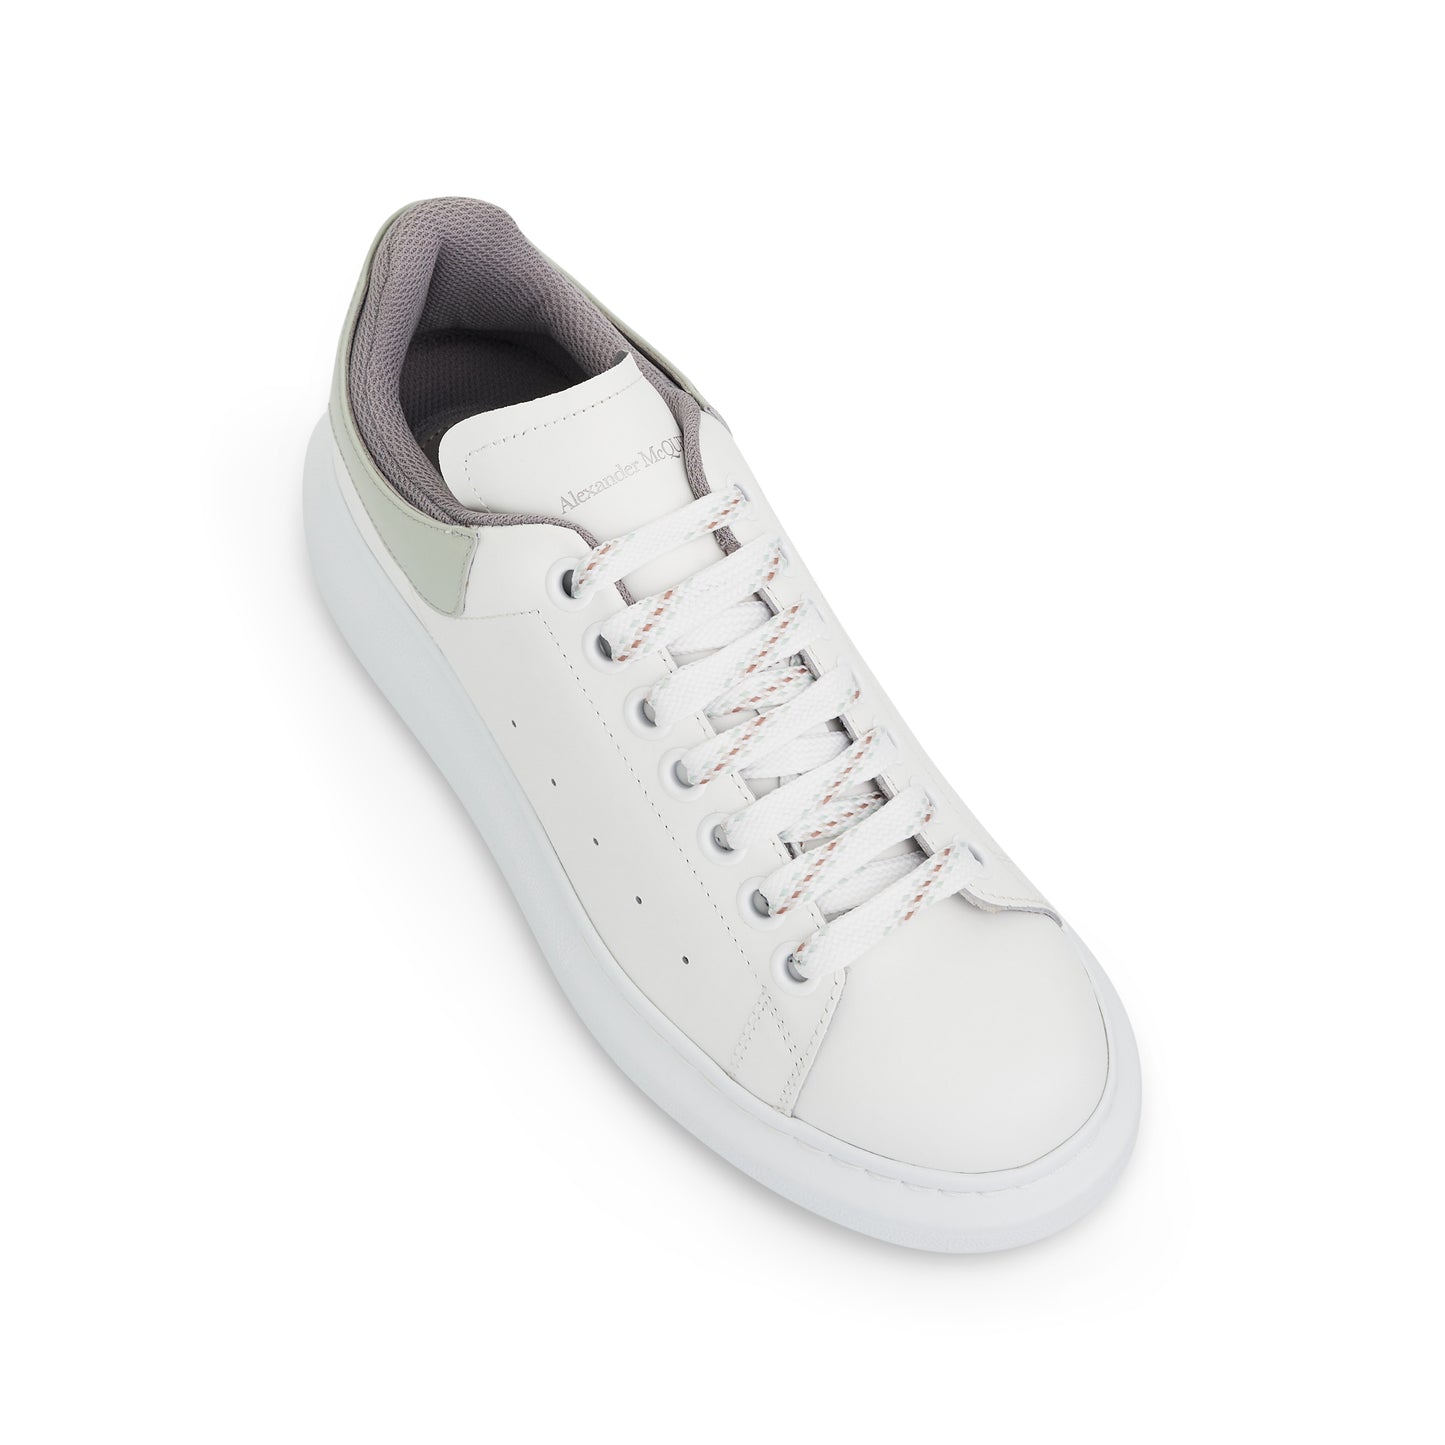 Larry Oversized Sneaker in White/Cement